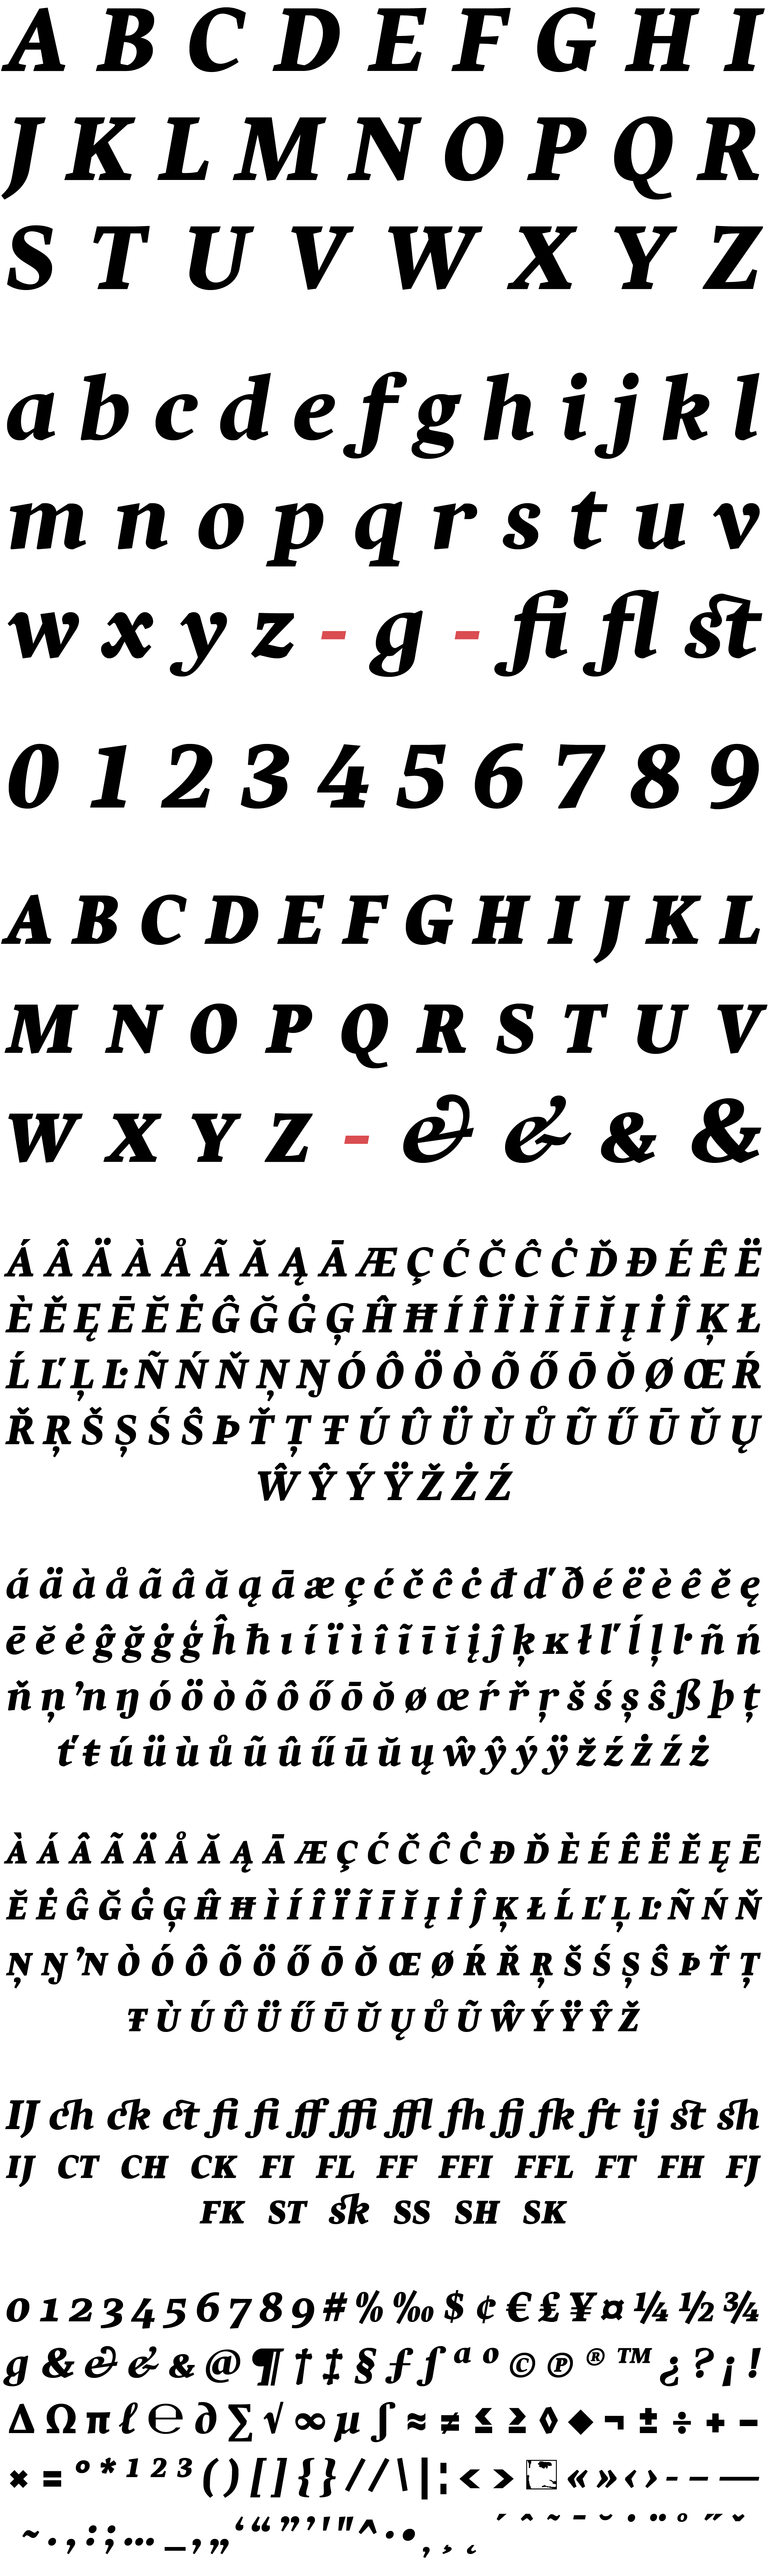 Harfang Black Italic Font Character Set